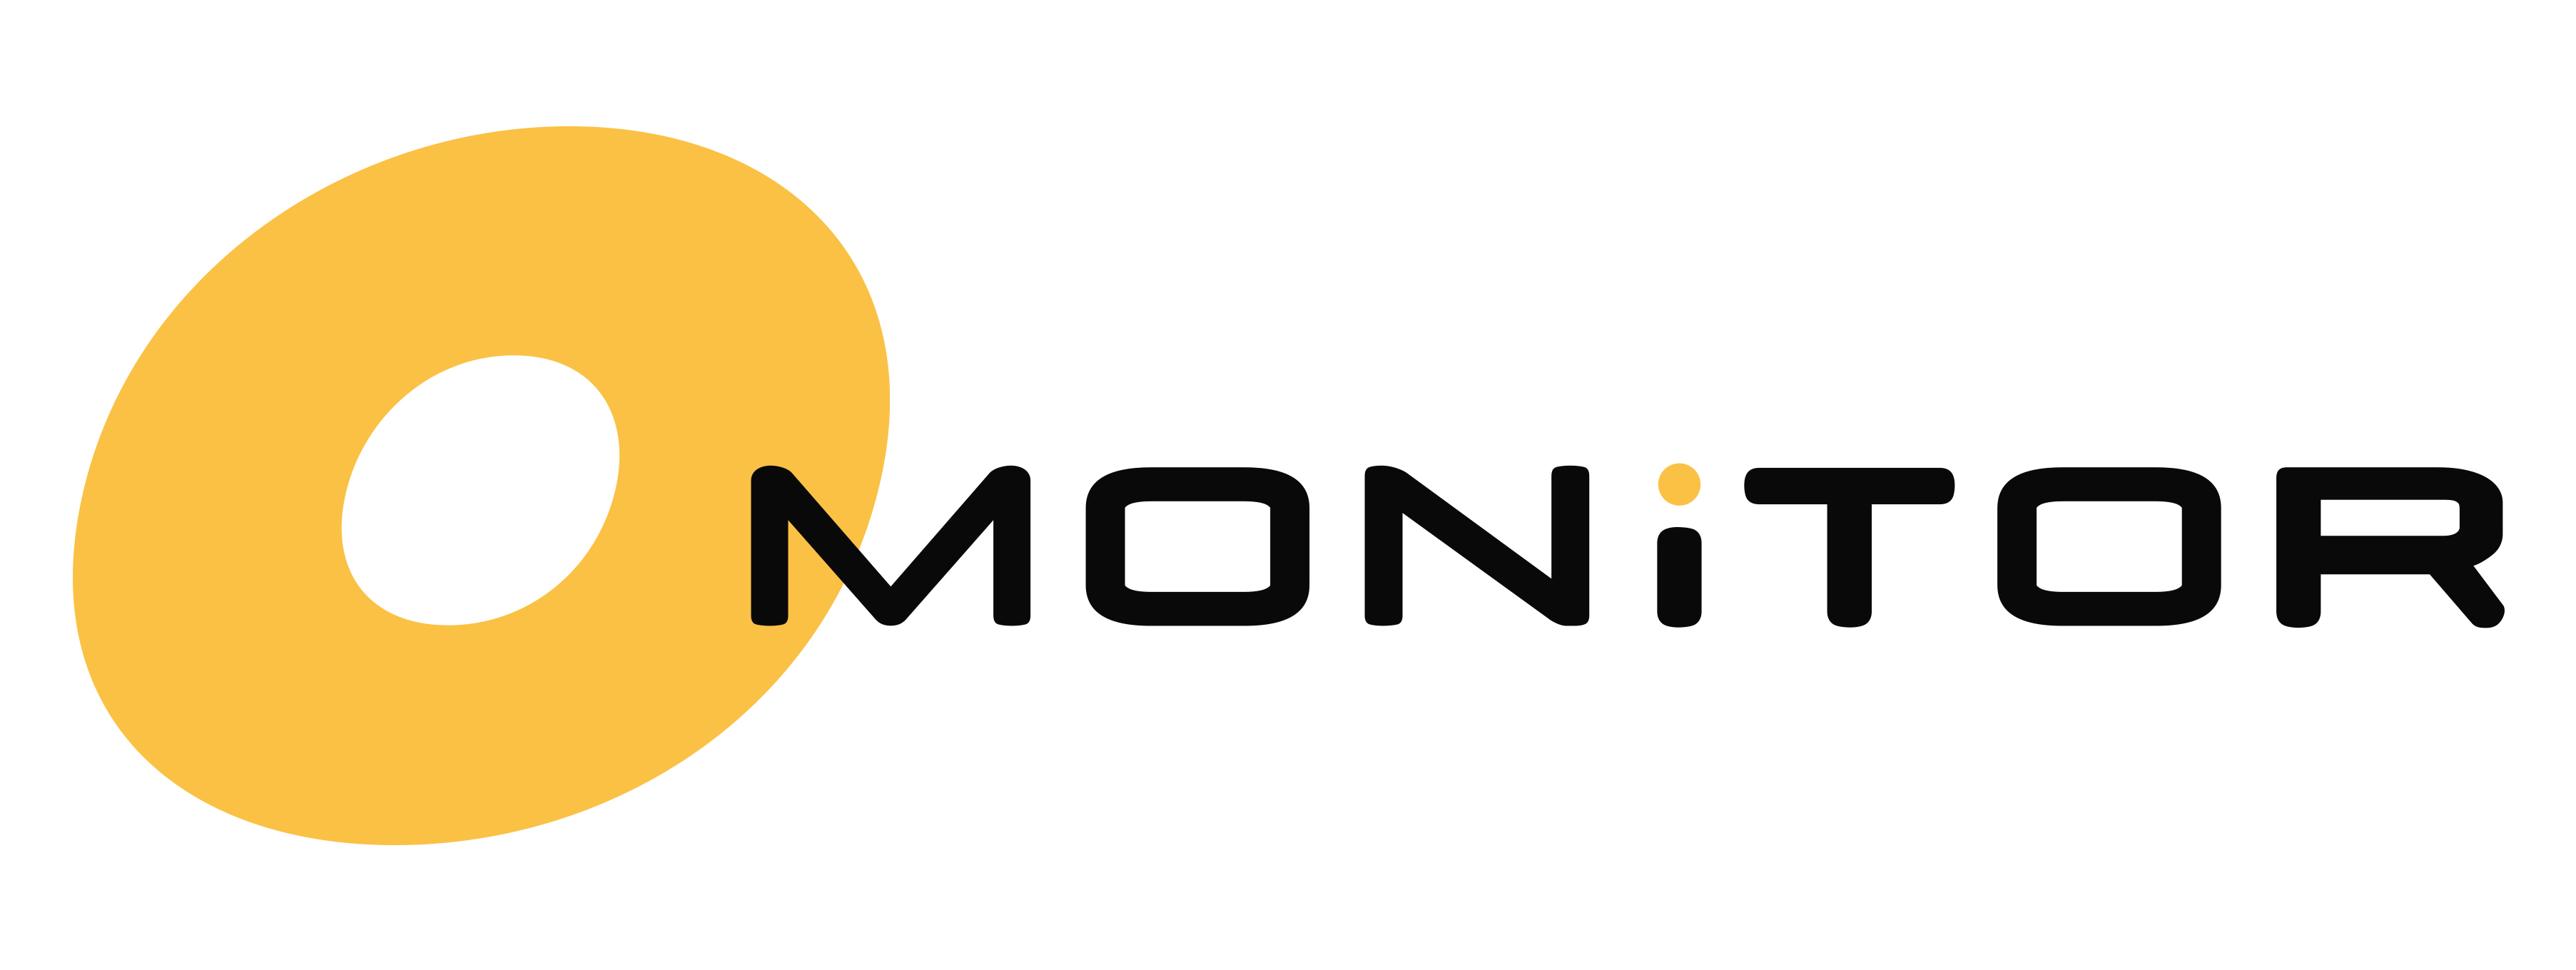 O-monitor